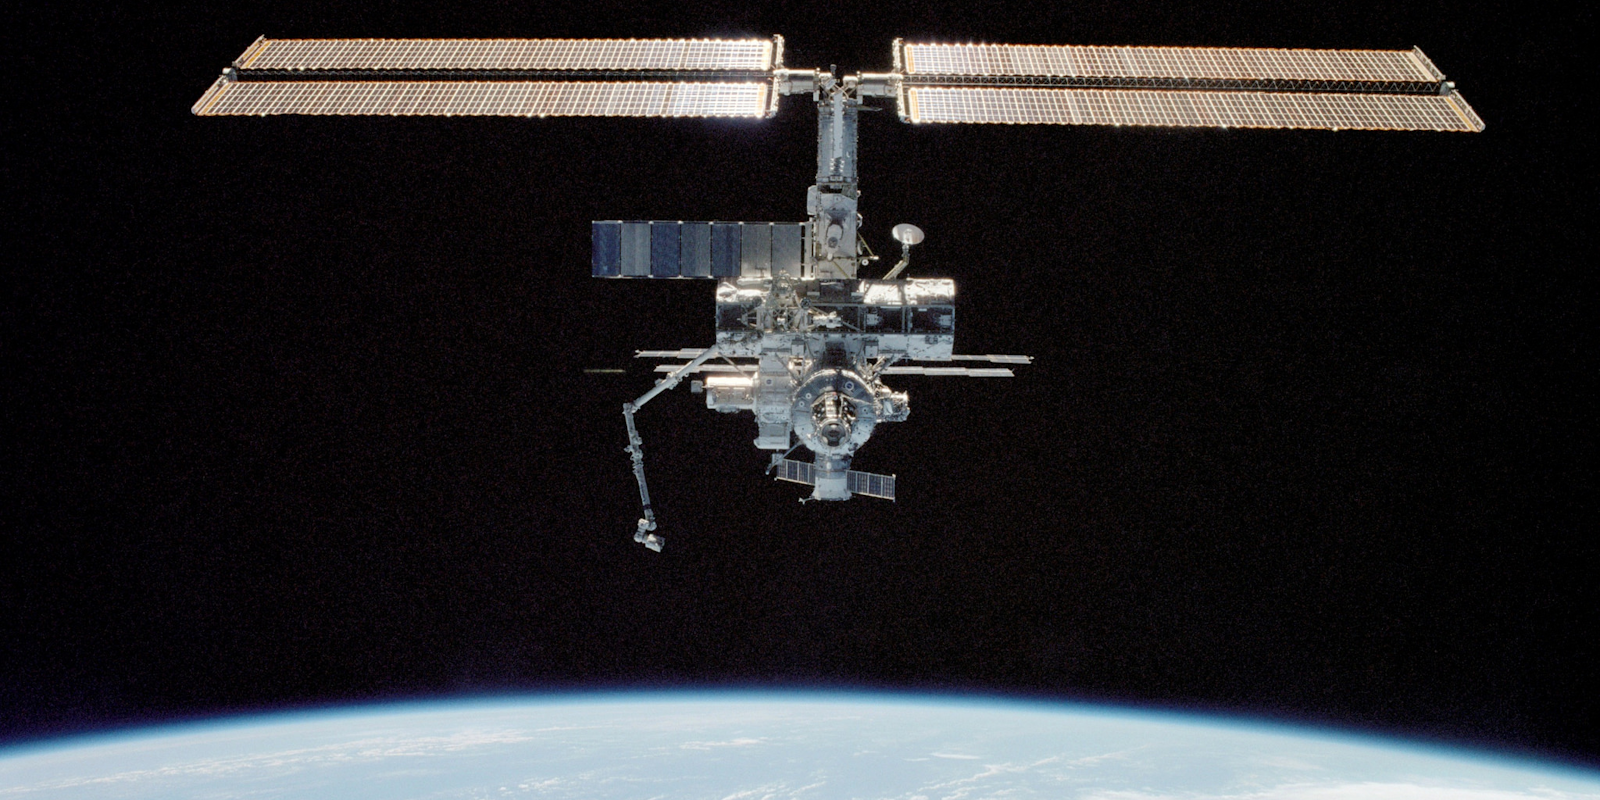 International Space Station, 2002